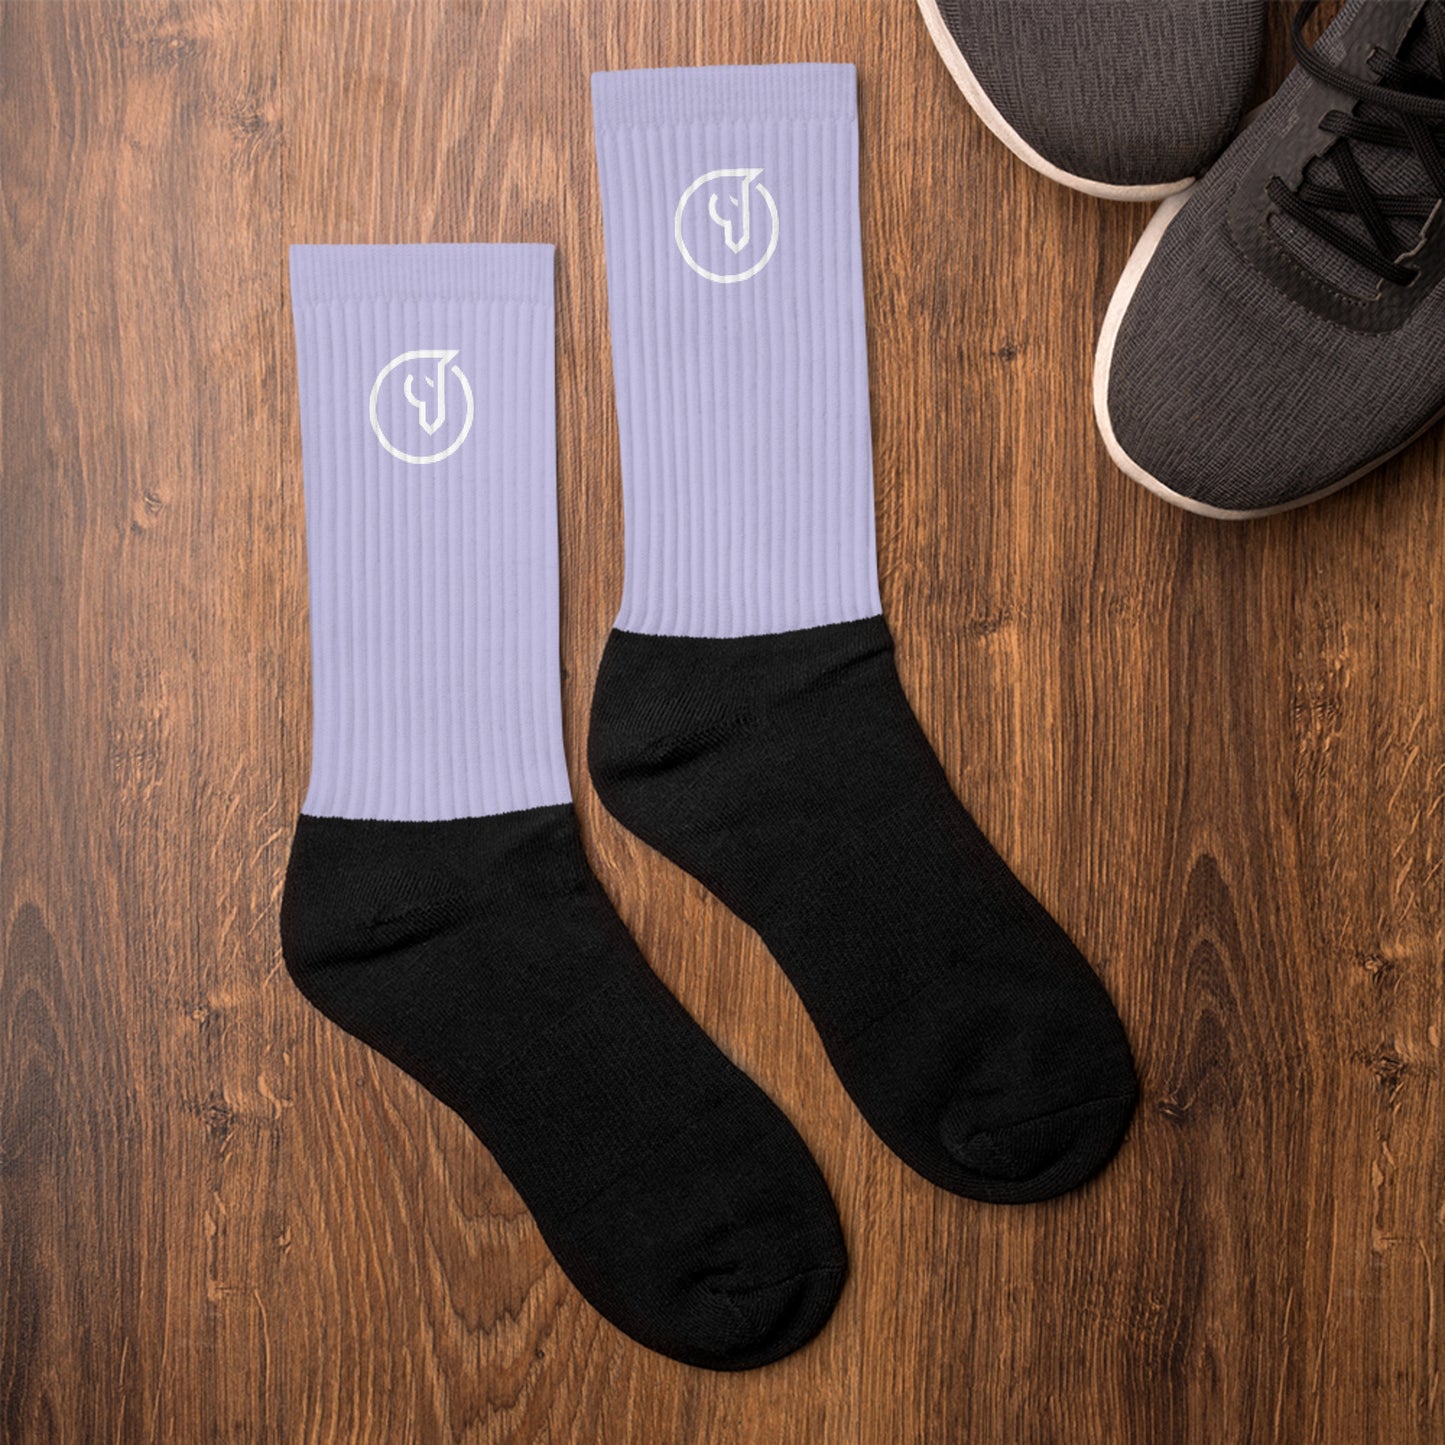 Humble Sportswear, active socks for men and women, unisex socks, black foot socks